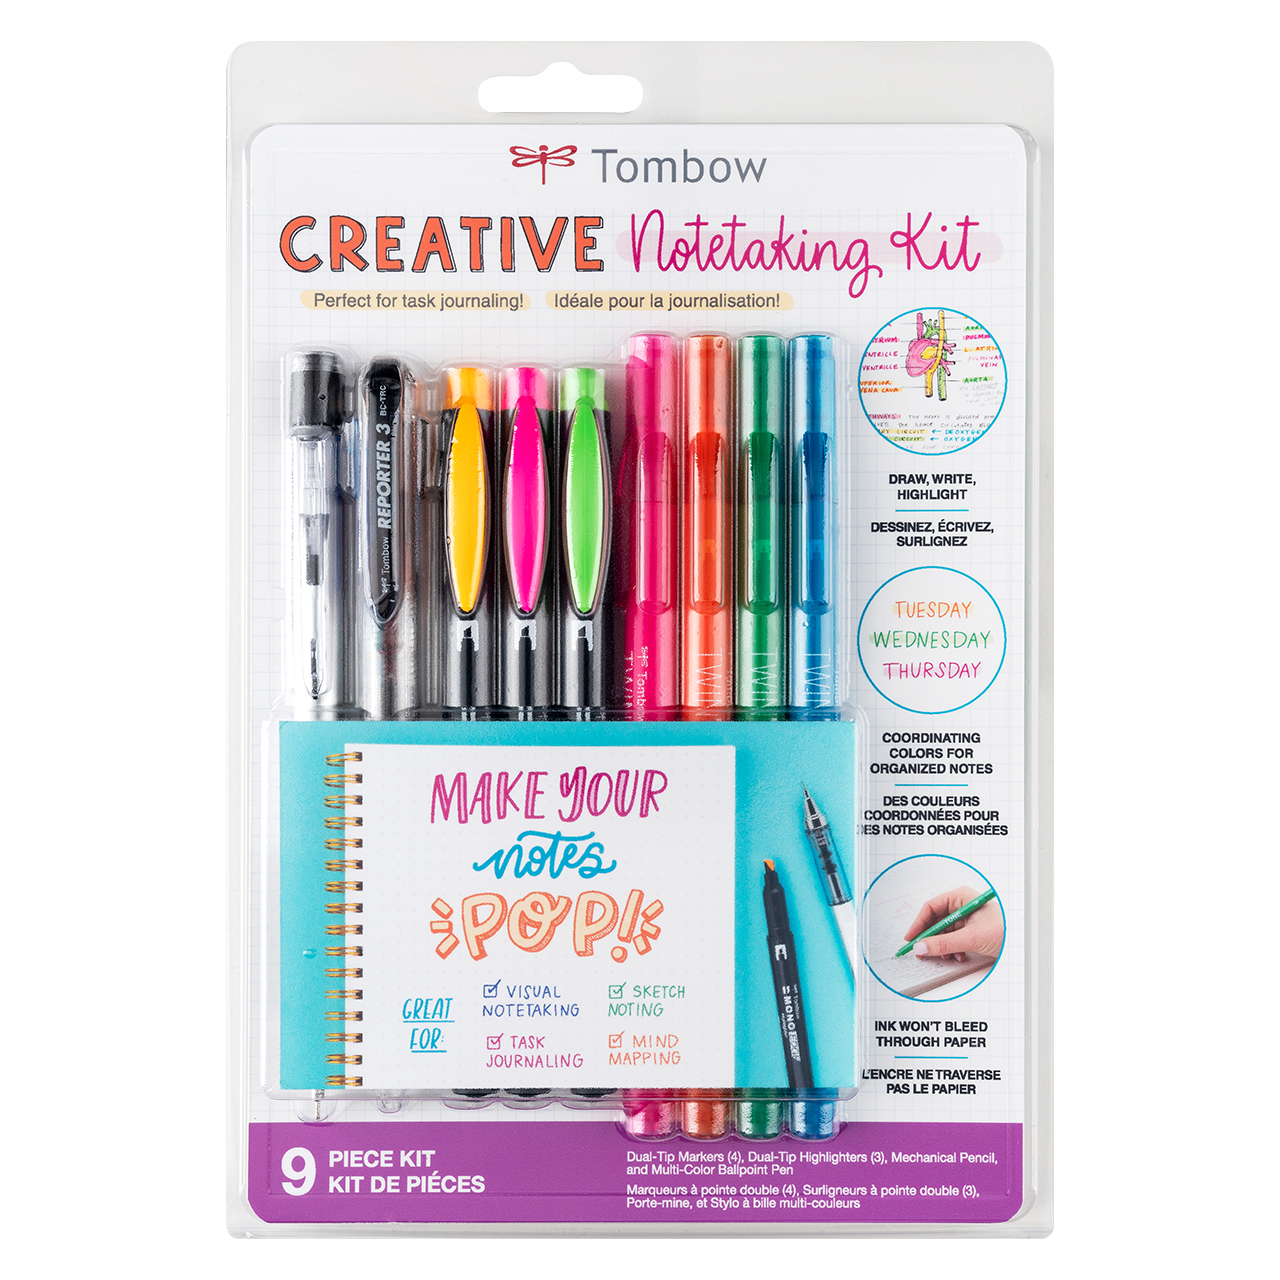 Creativity Collection (4 kits)